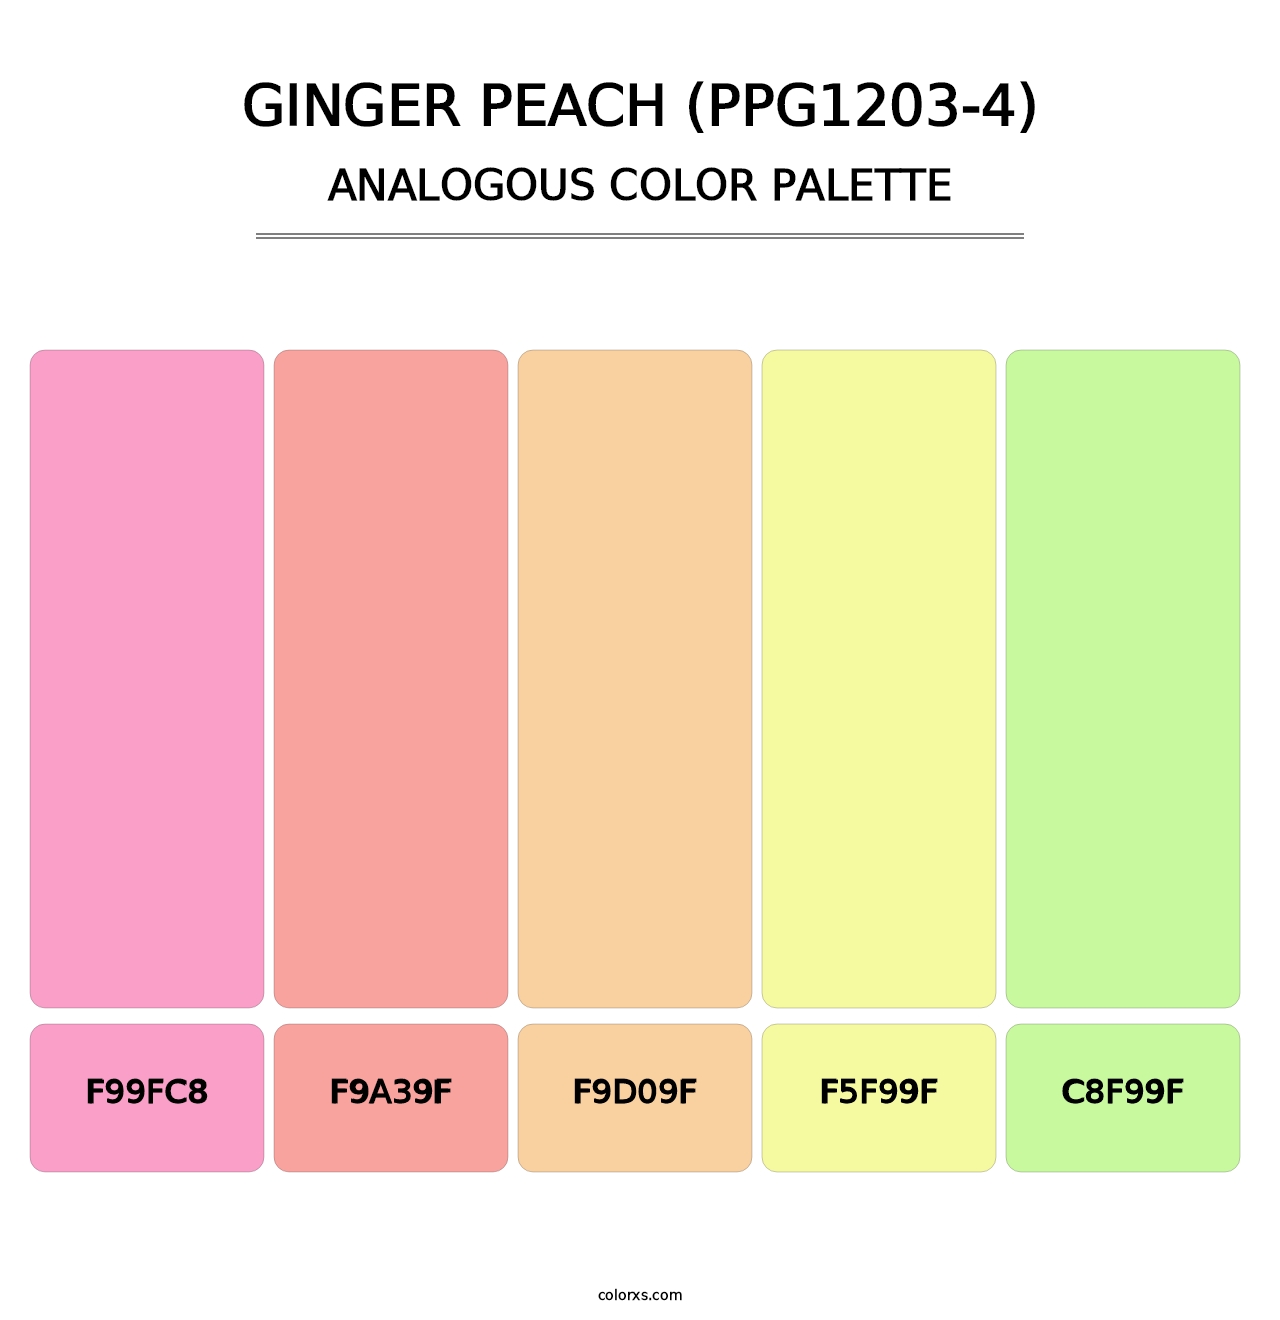 Ginger Peach (PPG1203-4) - Analogous Color Palette